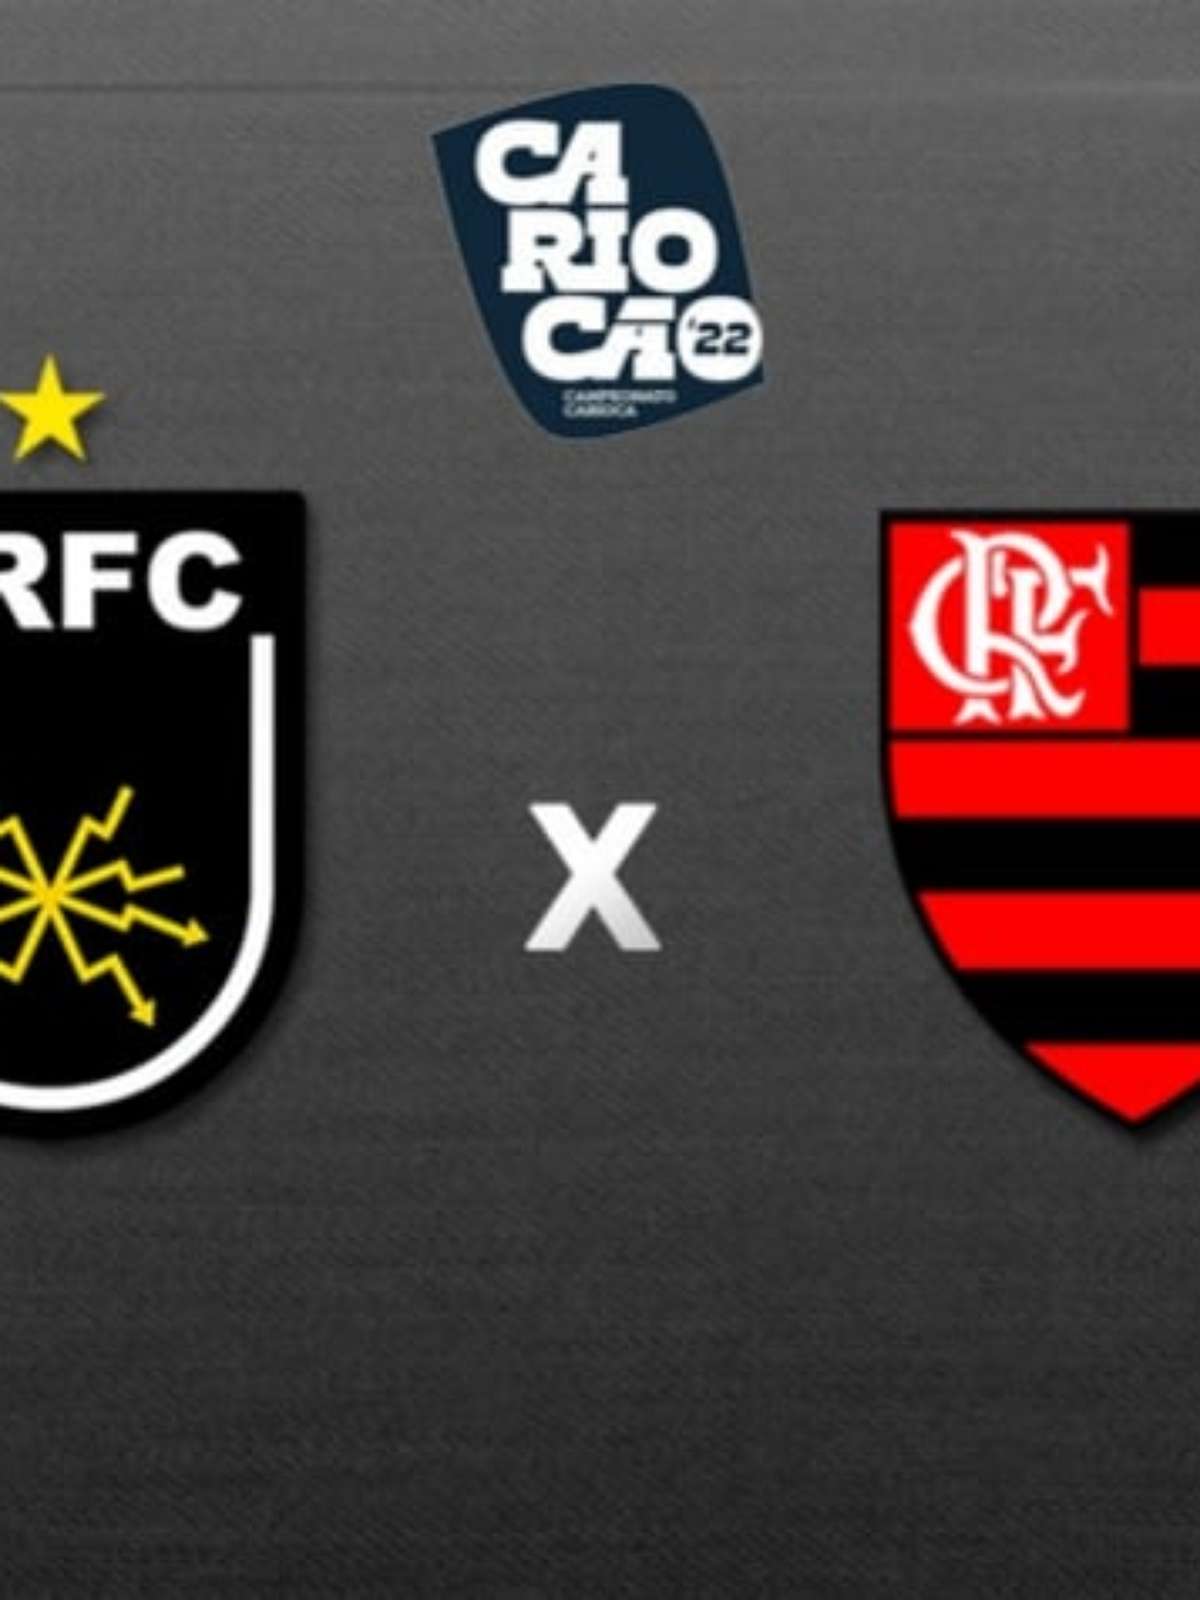 Flamengo na Recopa, Champions, Rio Open Onde assistir os jogos desta  terça-feira - Lance!